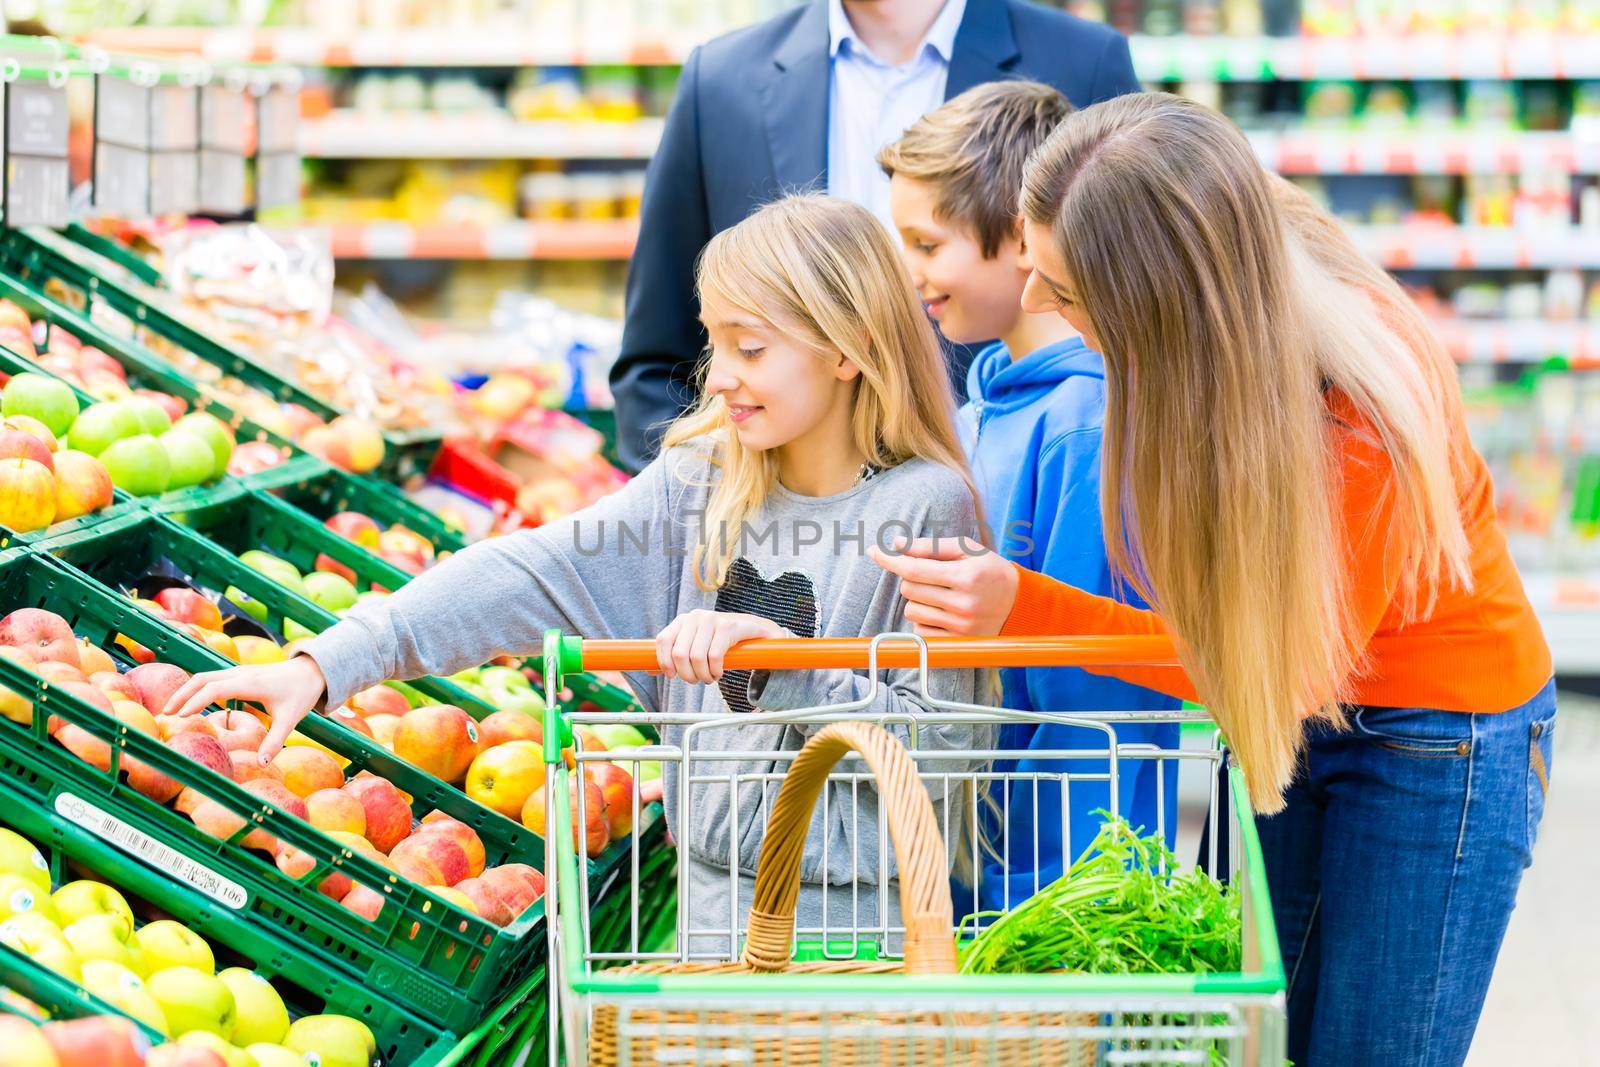 Family grocery shopping in hypermarket by Kzenon